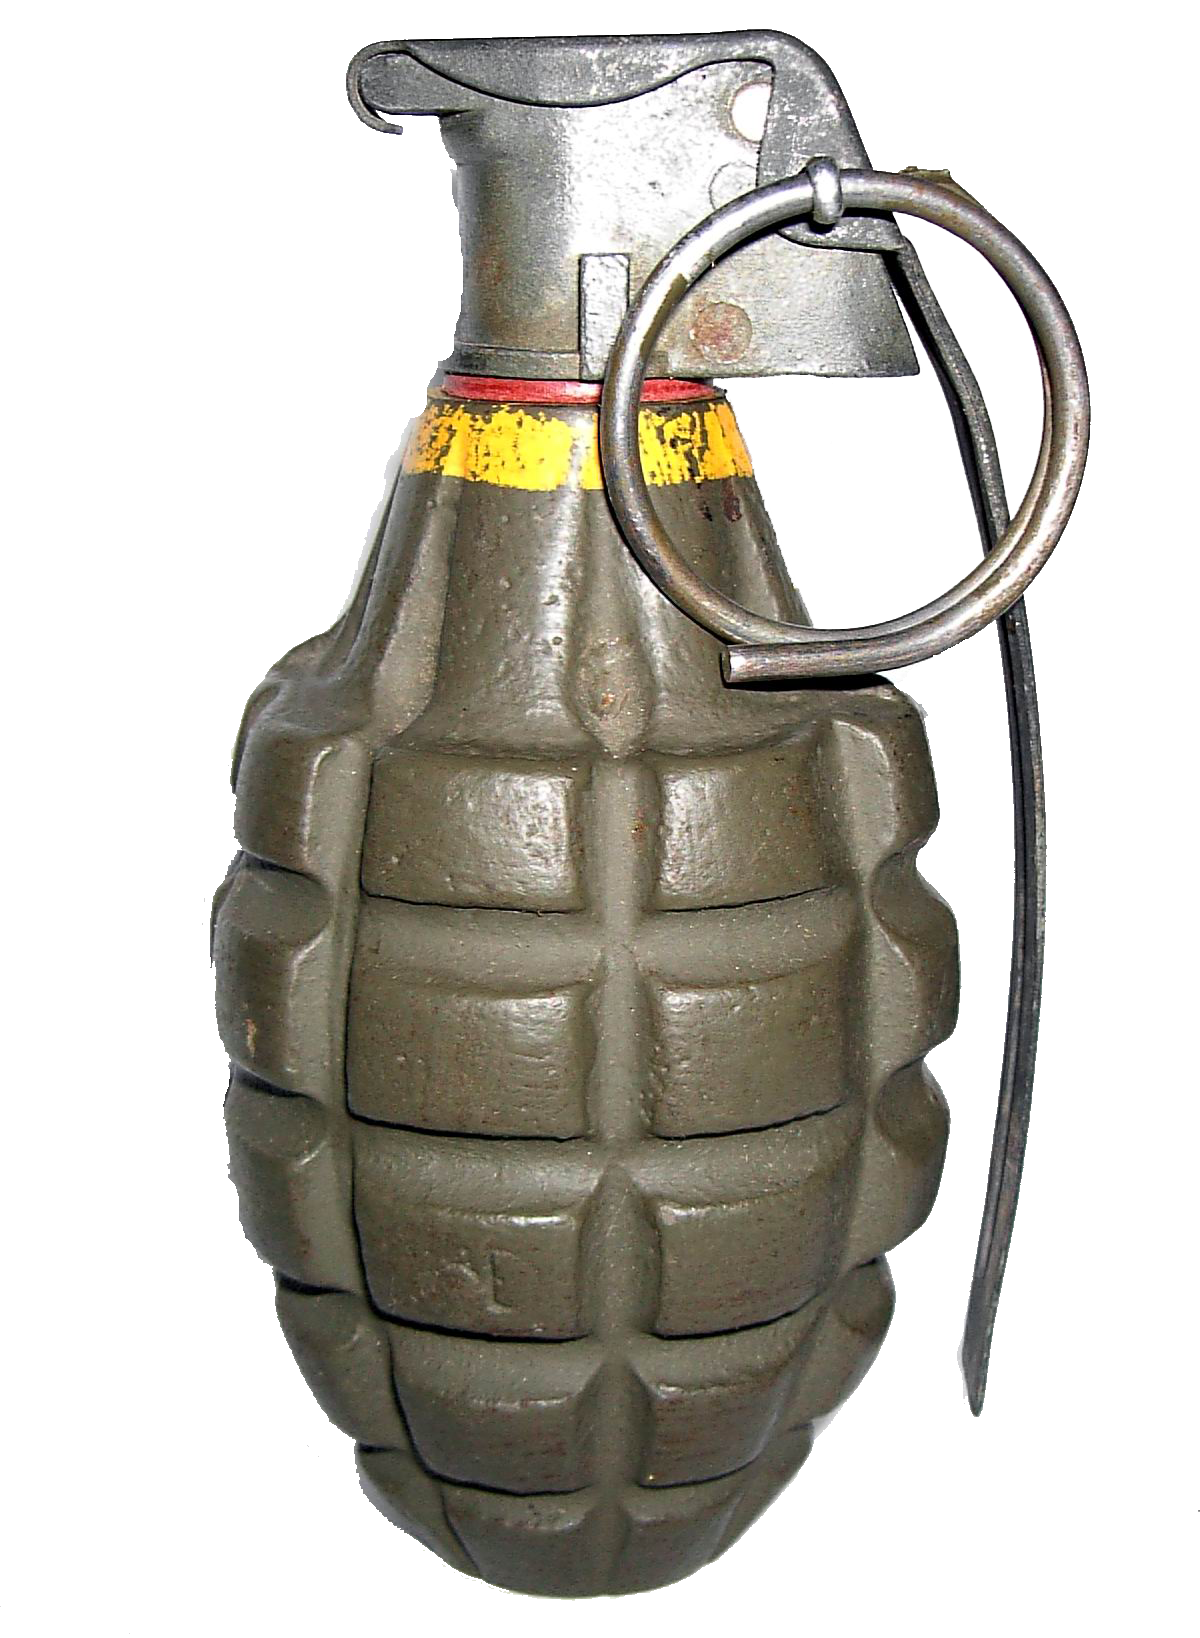 Grenade PNG image free Download 